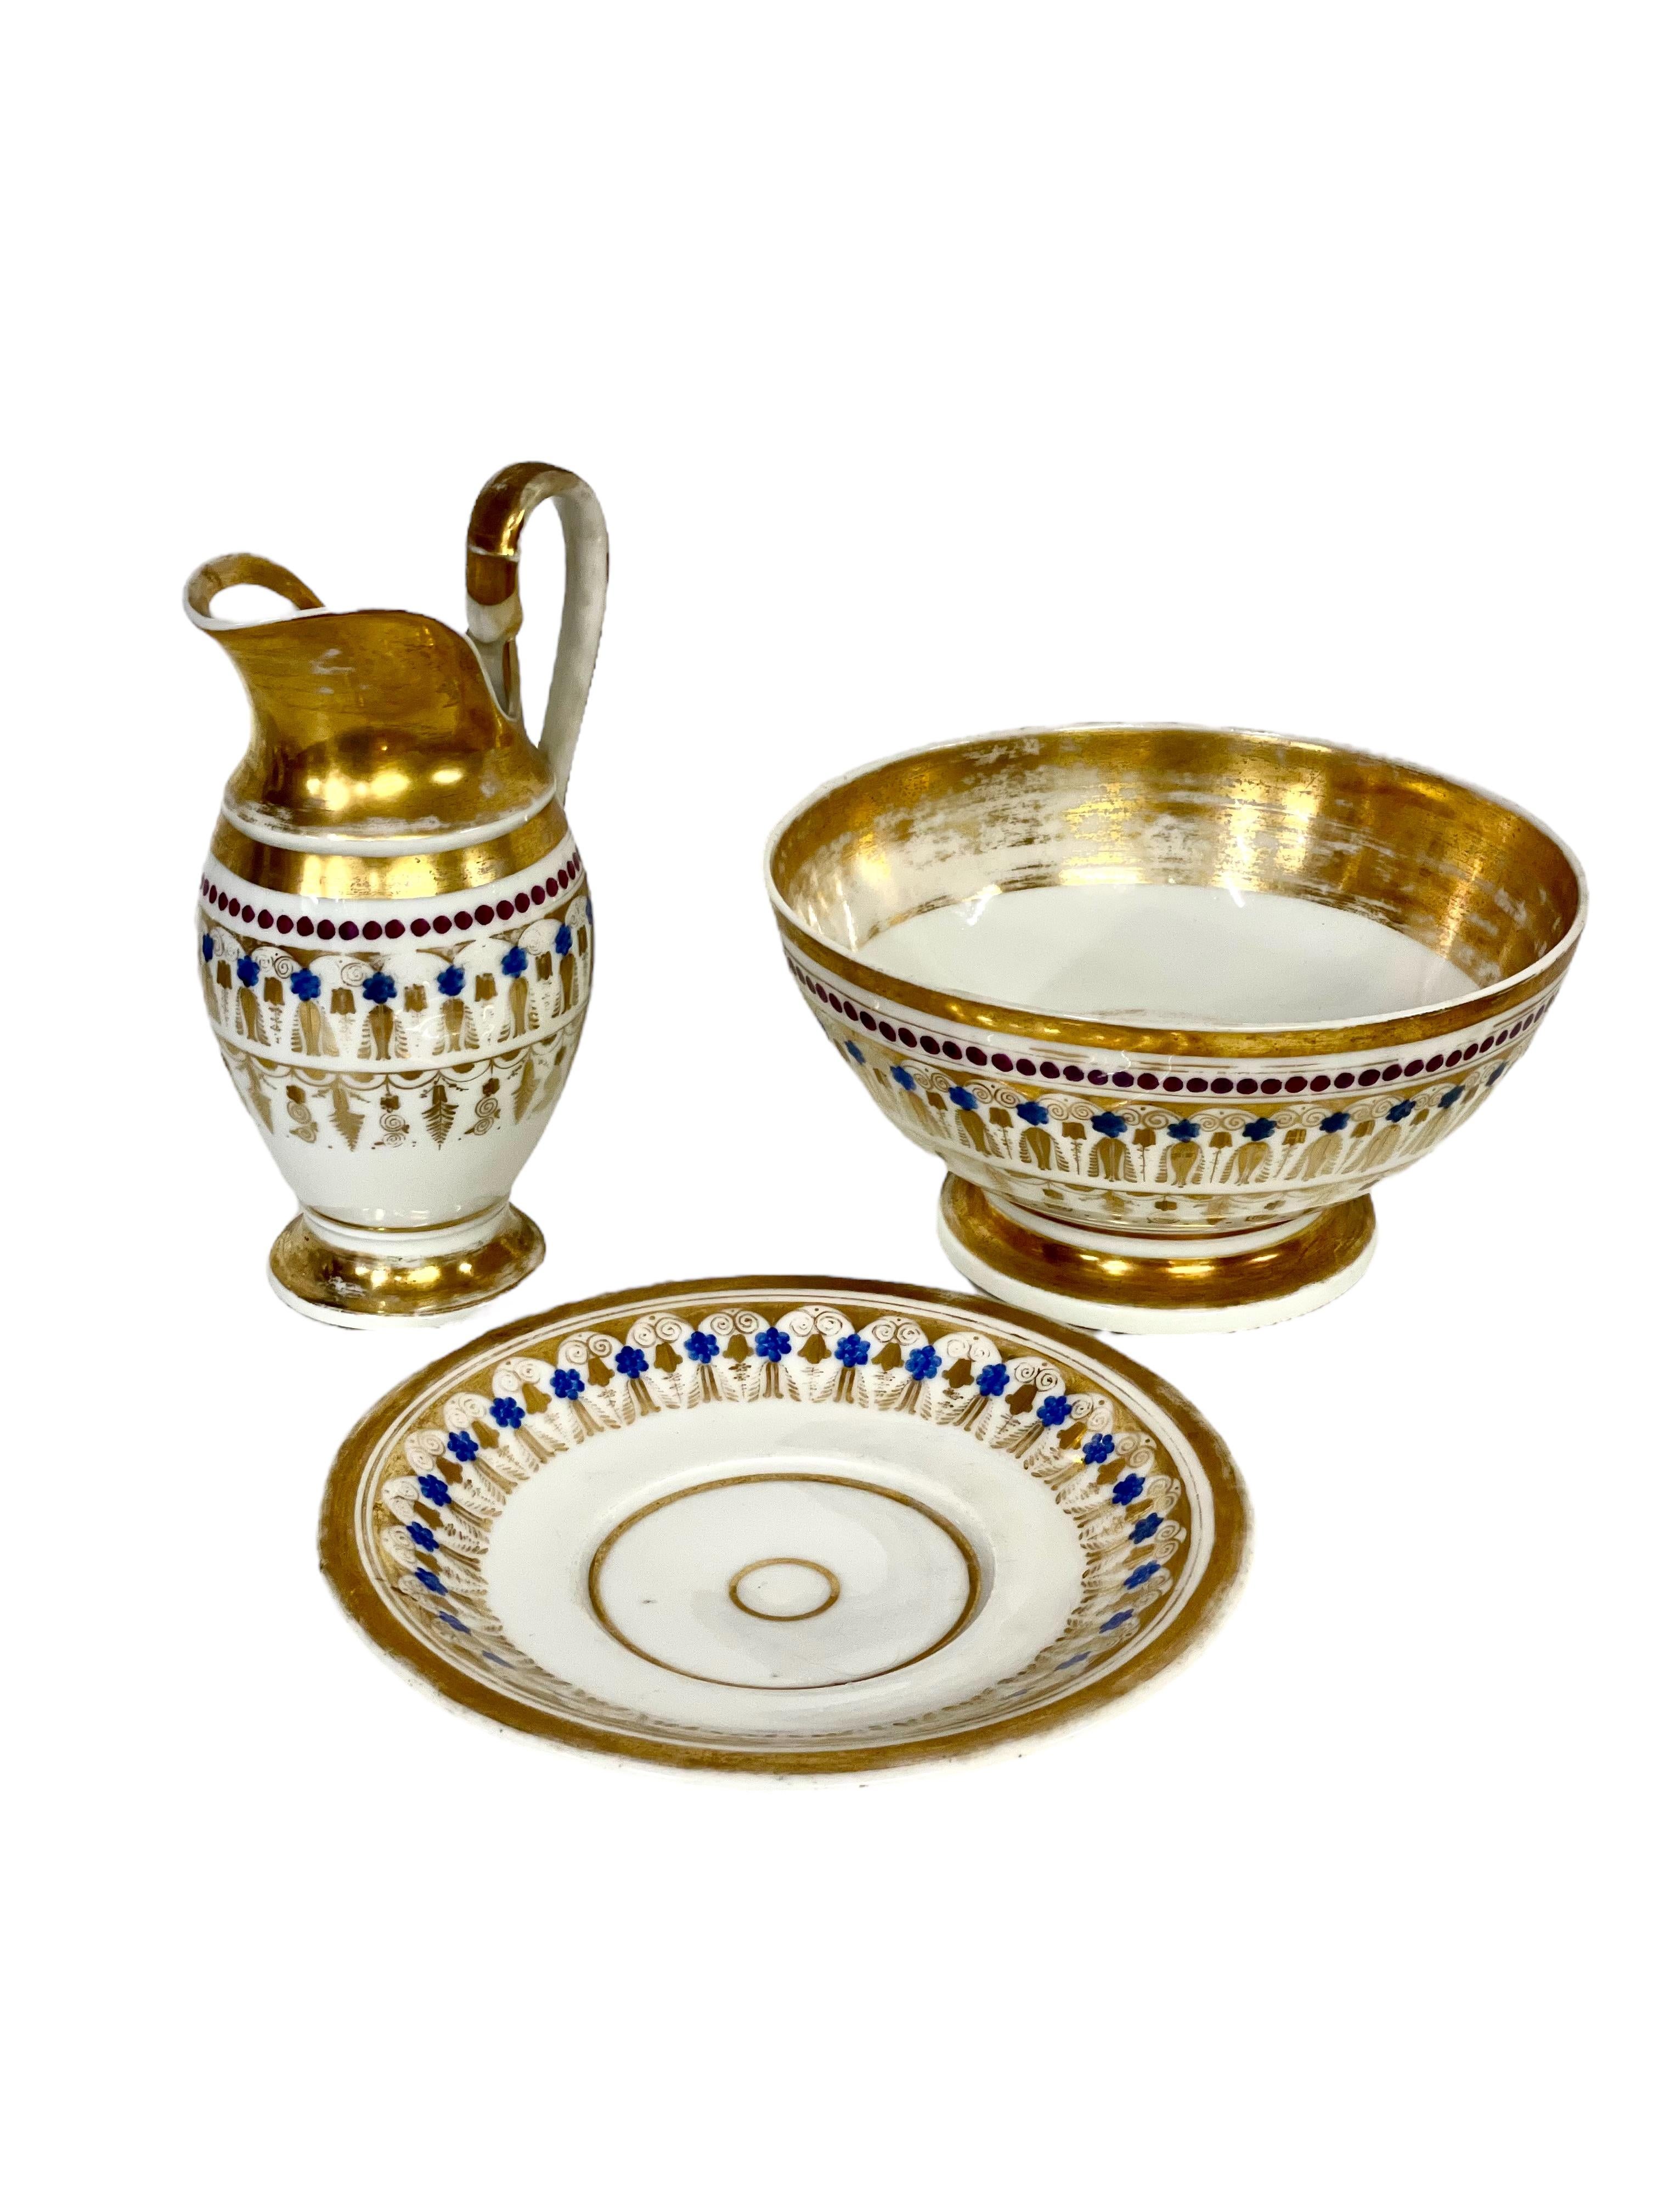 Old Paris Porcelain Wash Jug and Basin with Gilt Decoration For Sale 5